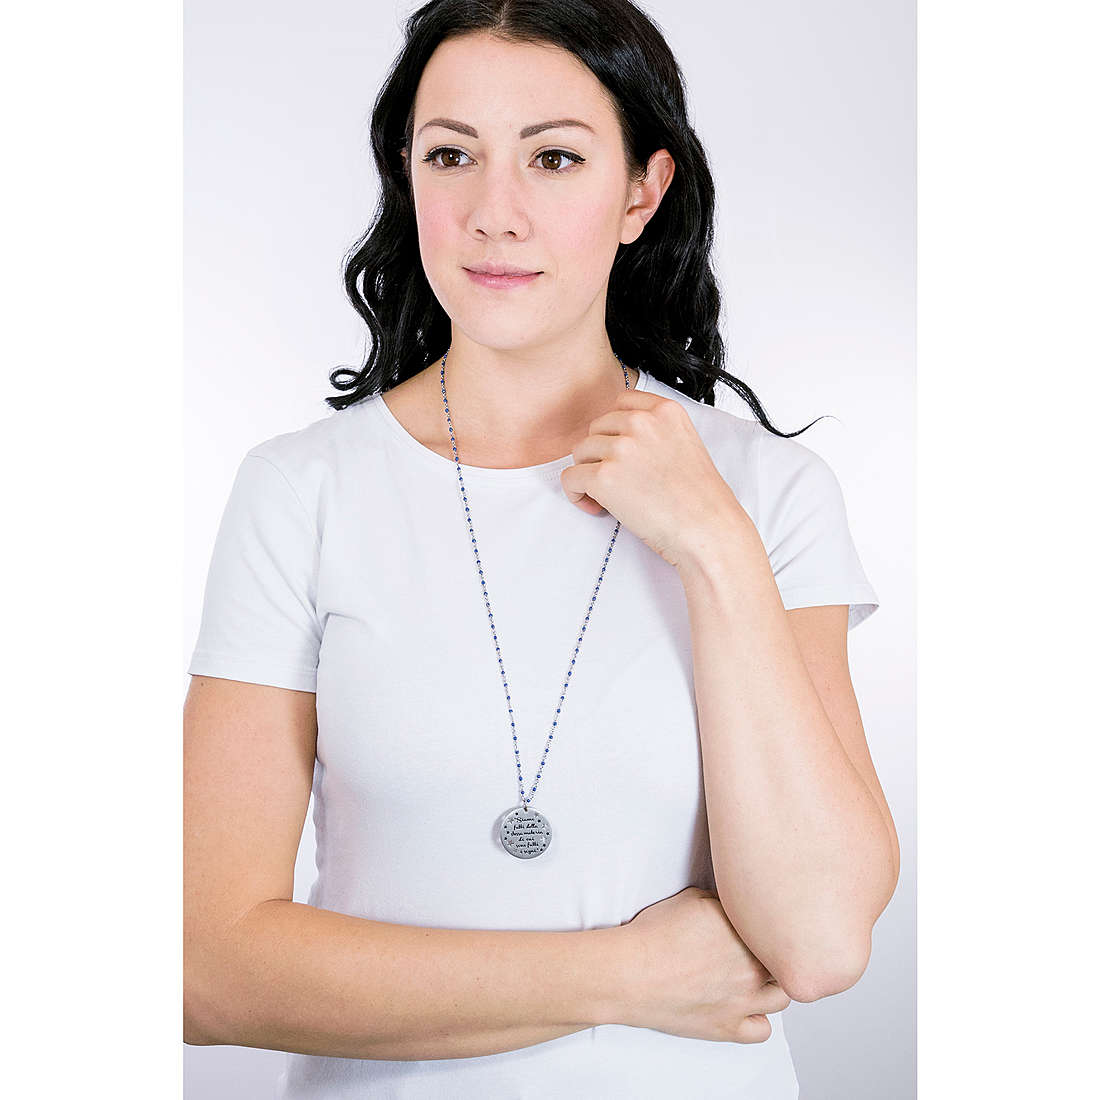 Kidult necklaces Philosophy woman 751023 wearing